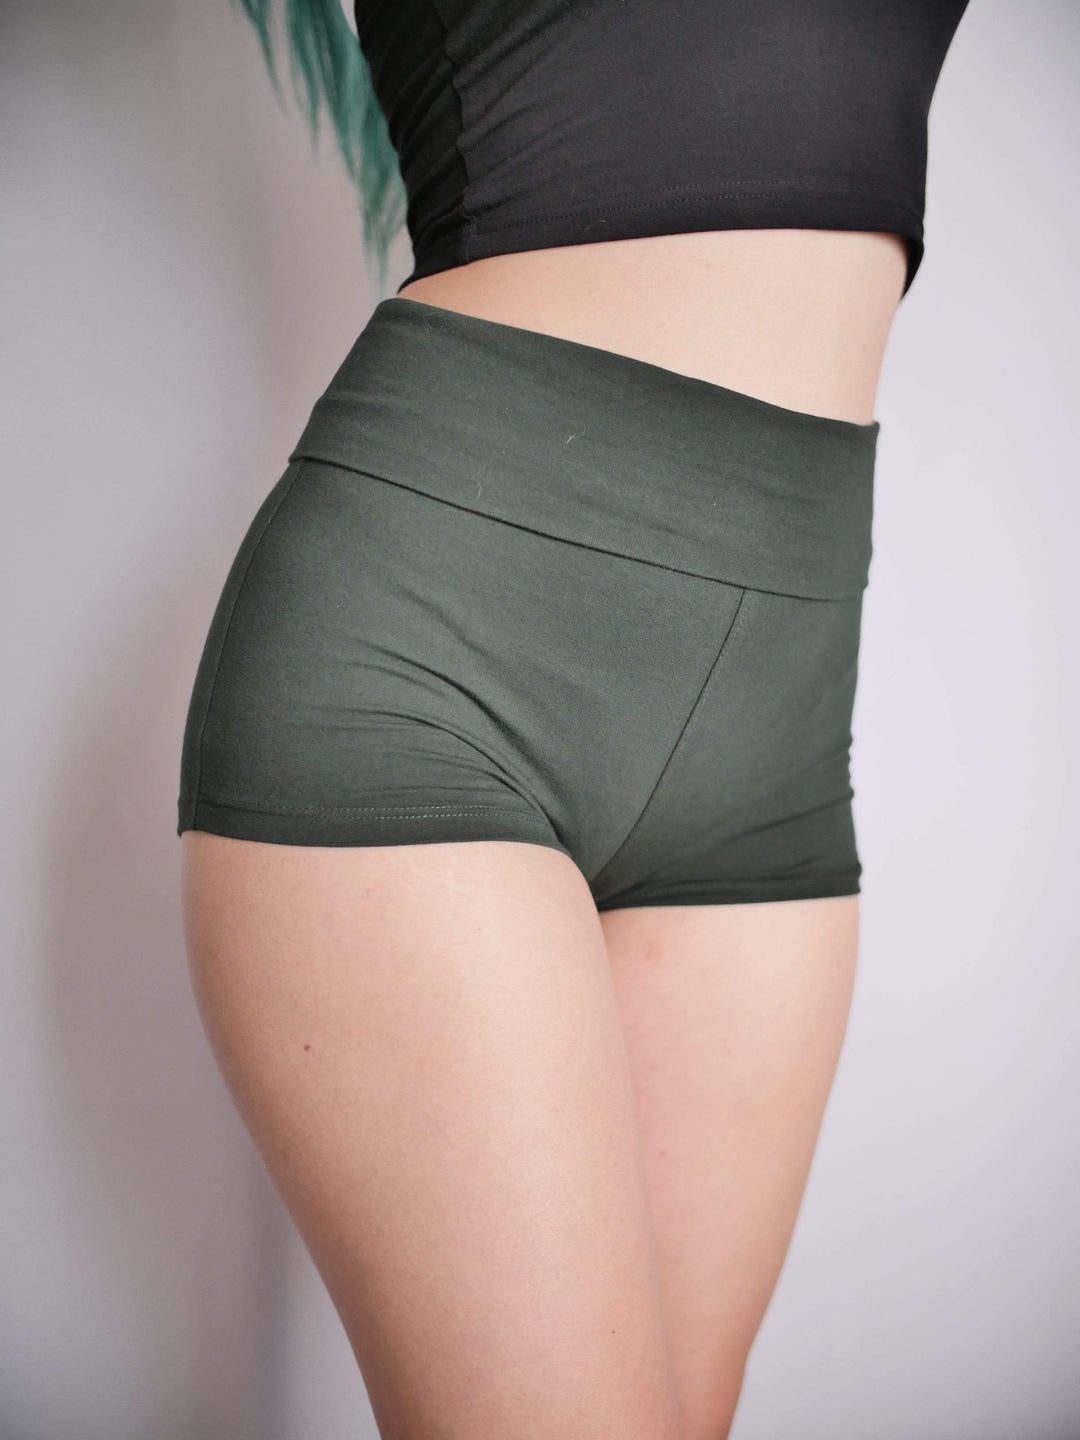 PixelThat Punderwear Yoga Shorts Squats For Assgard Yoga Shorts/Pants